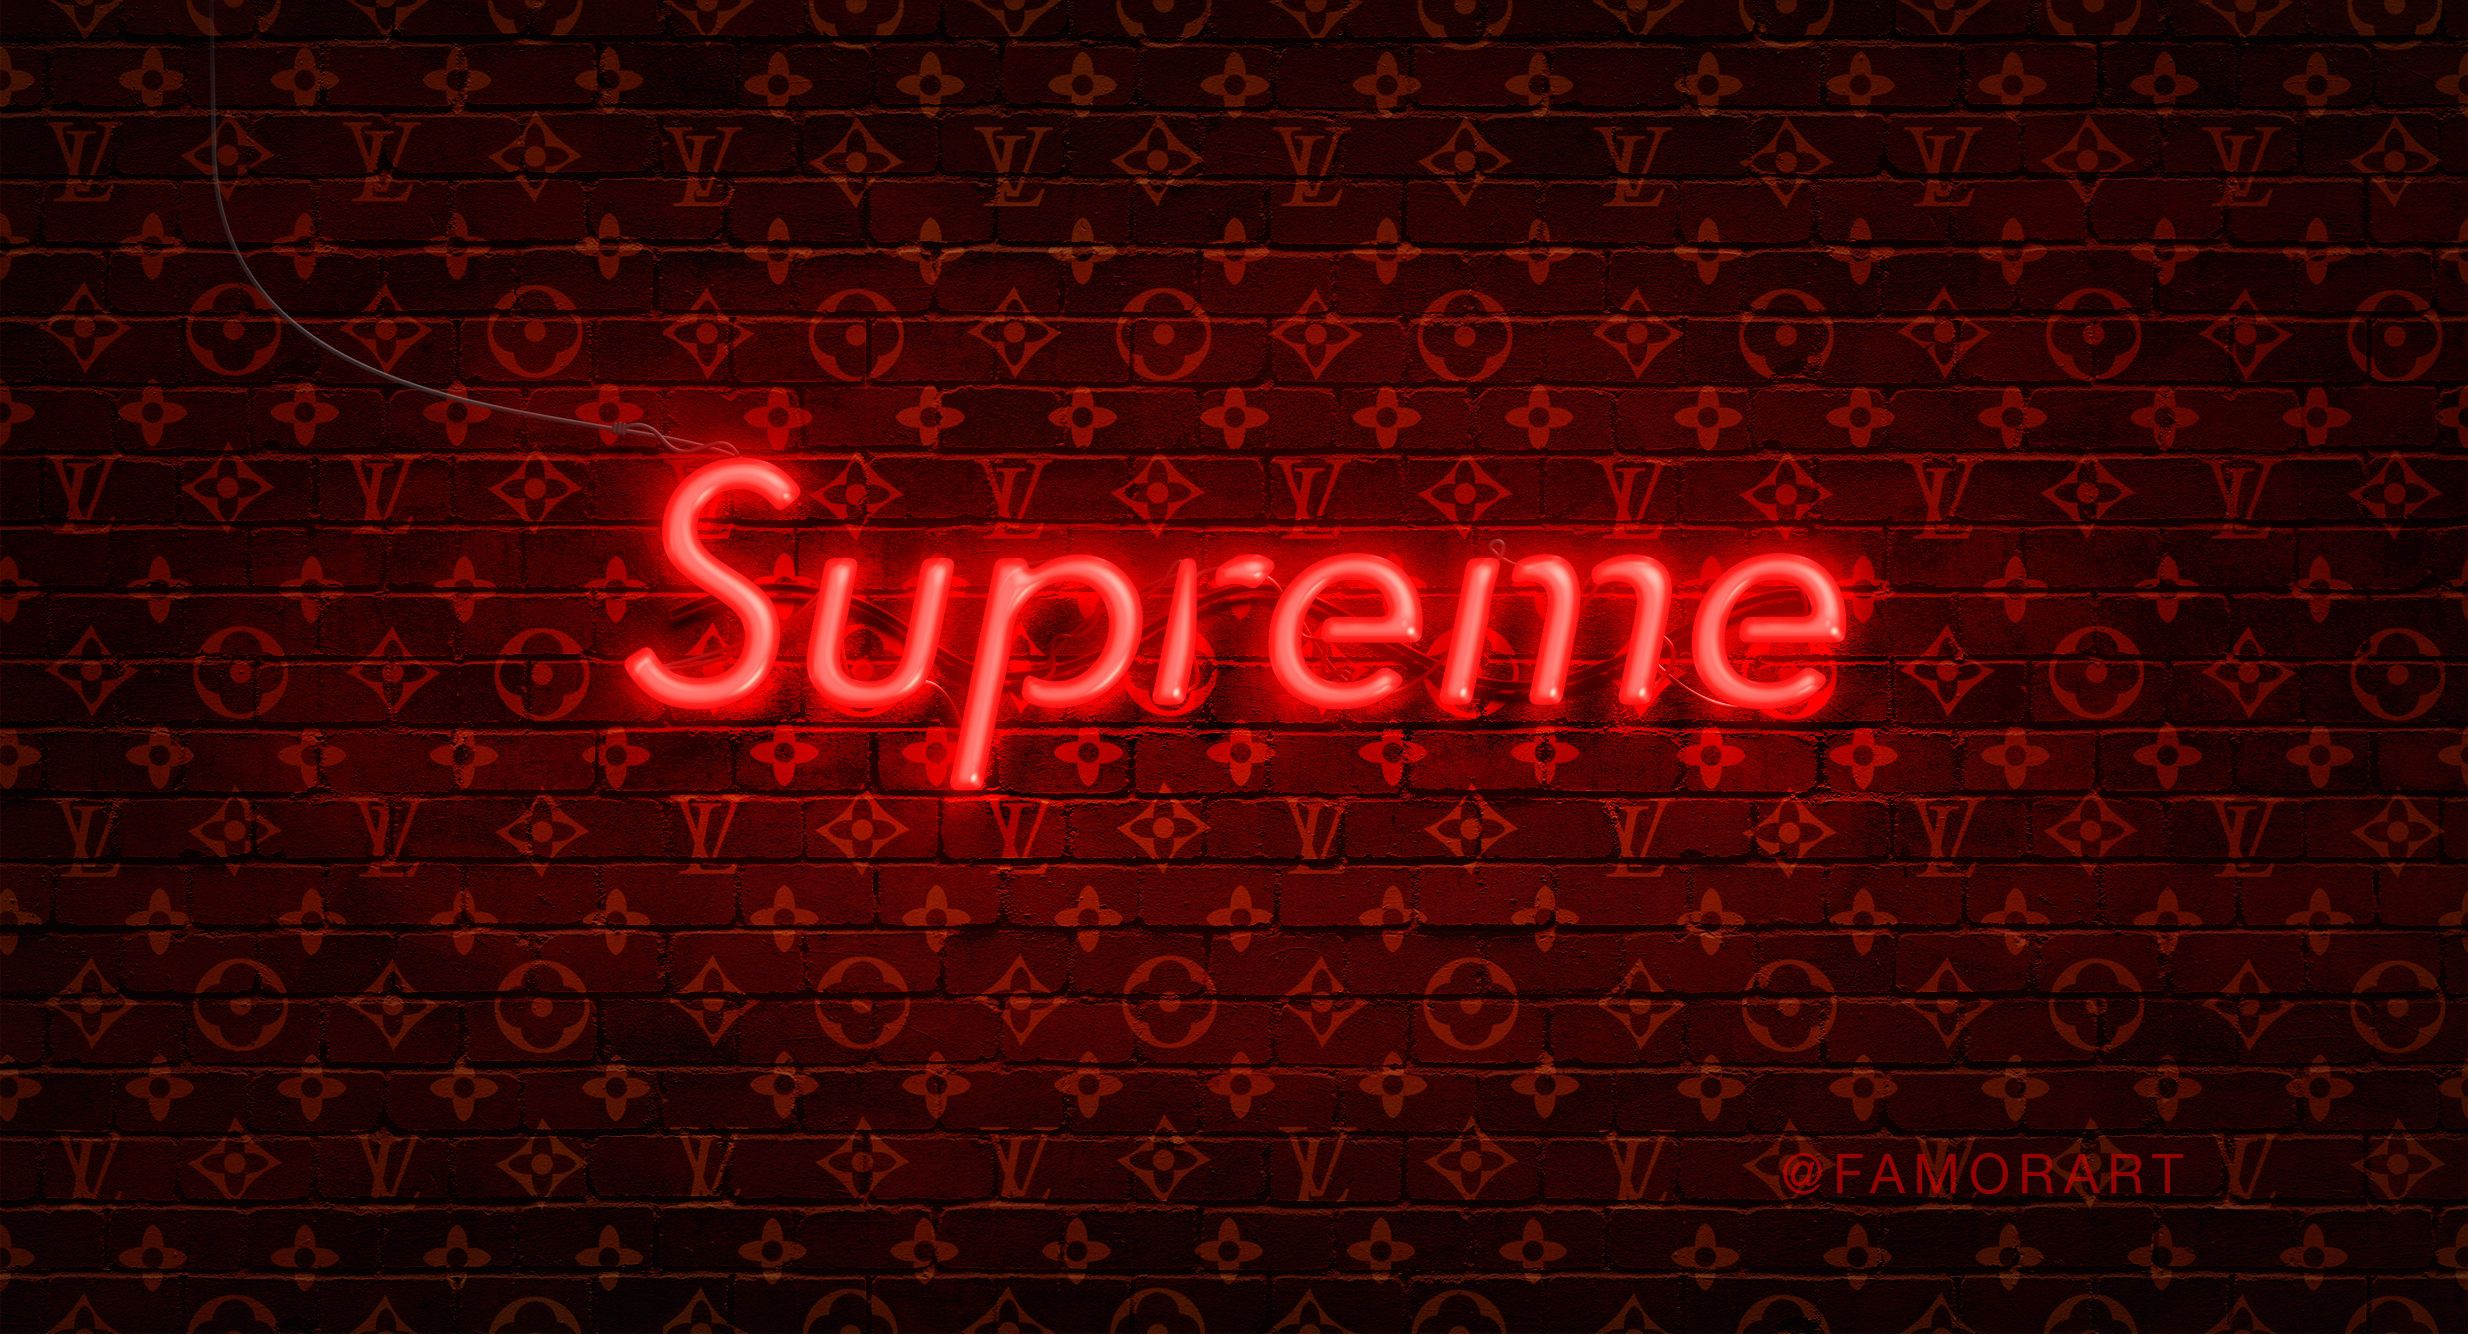 supreme lv wallpaper